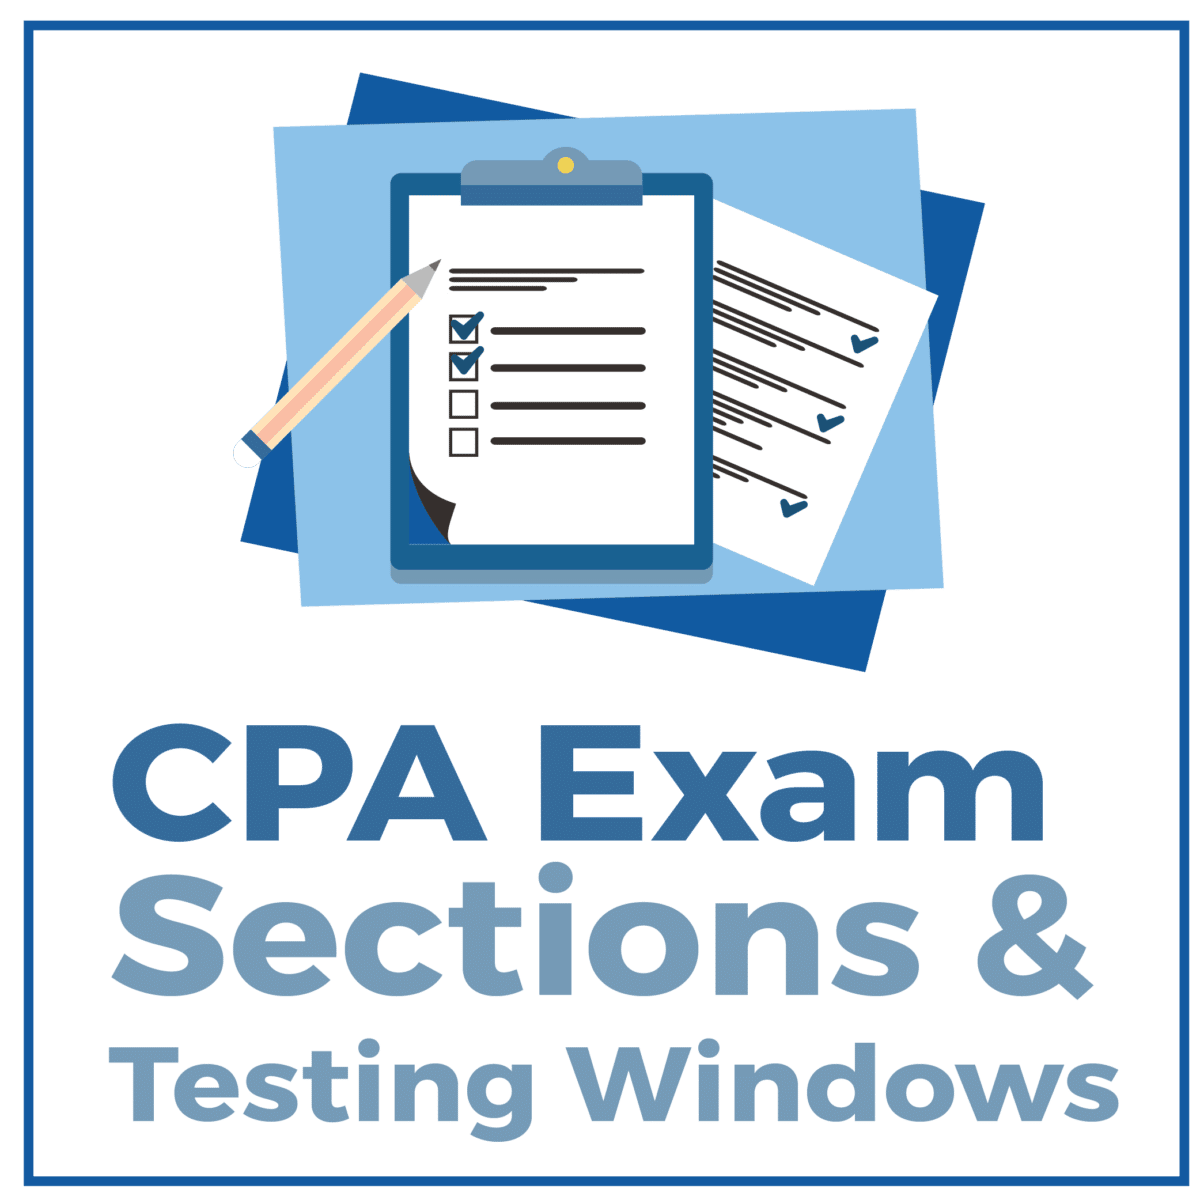 CPA Exam Sections & Testing Windows [AUD, BEC, FAR, REG]